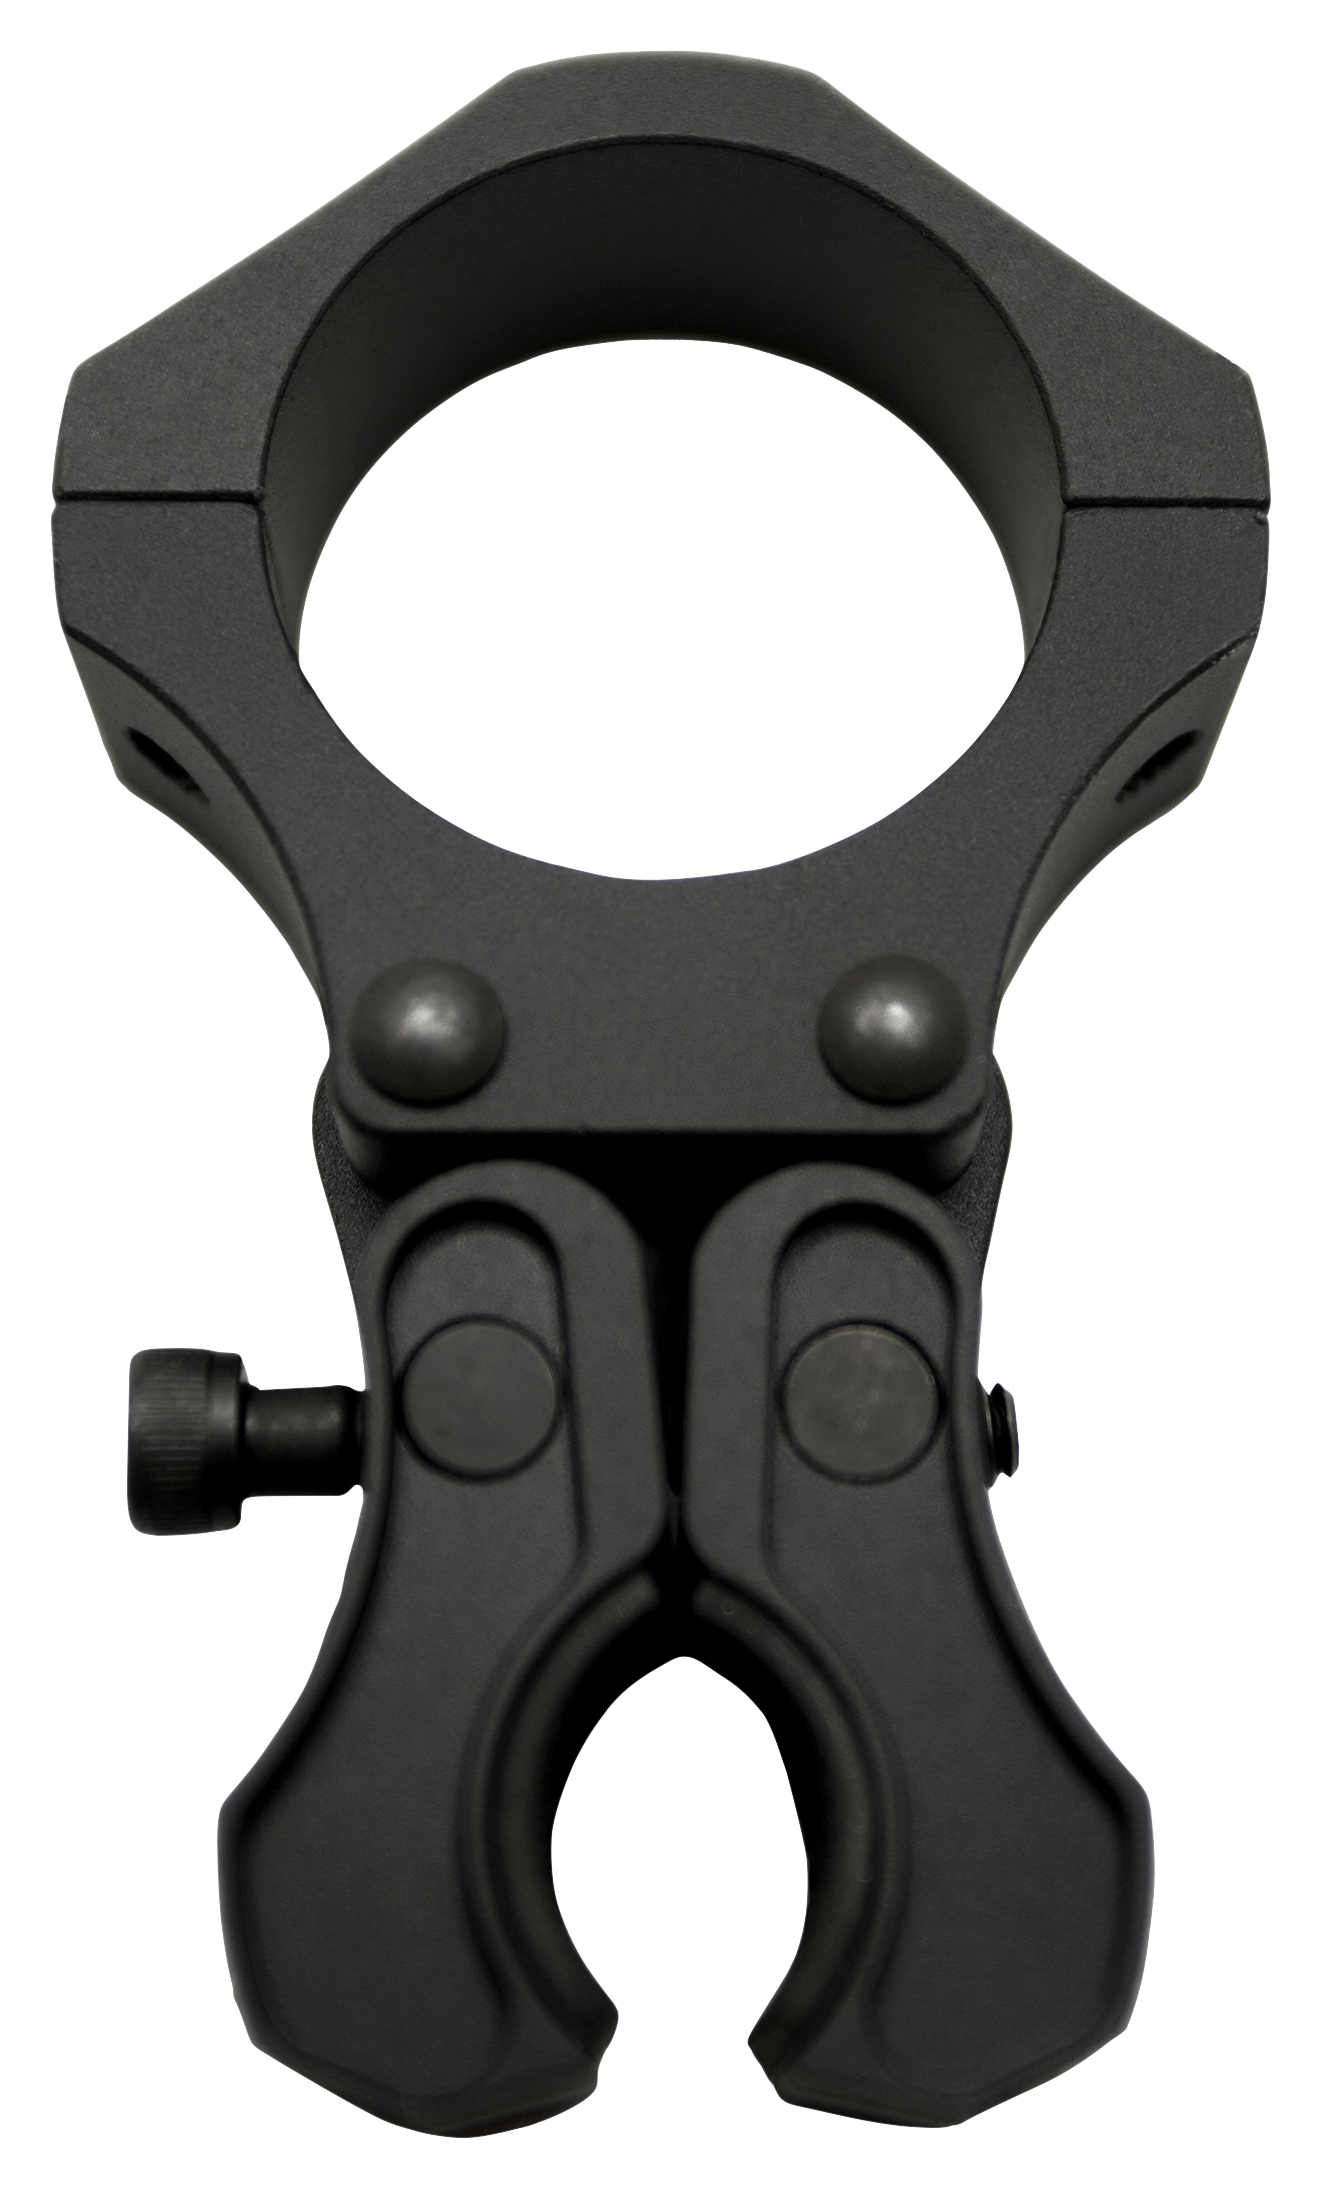 Tactacam Custom Gun/Scope Mount for Tactacam Cameras